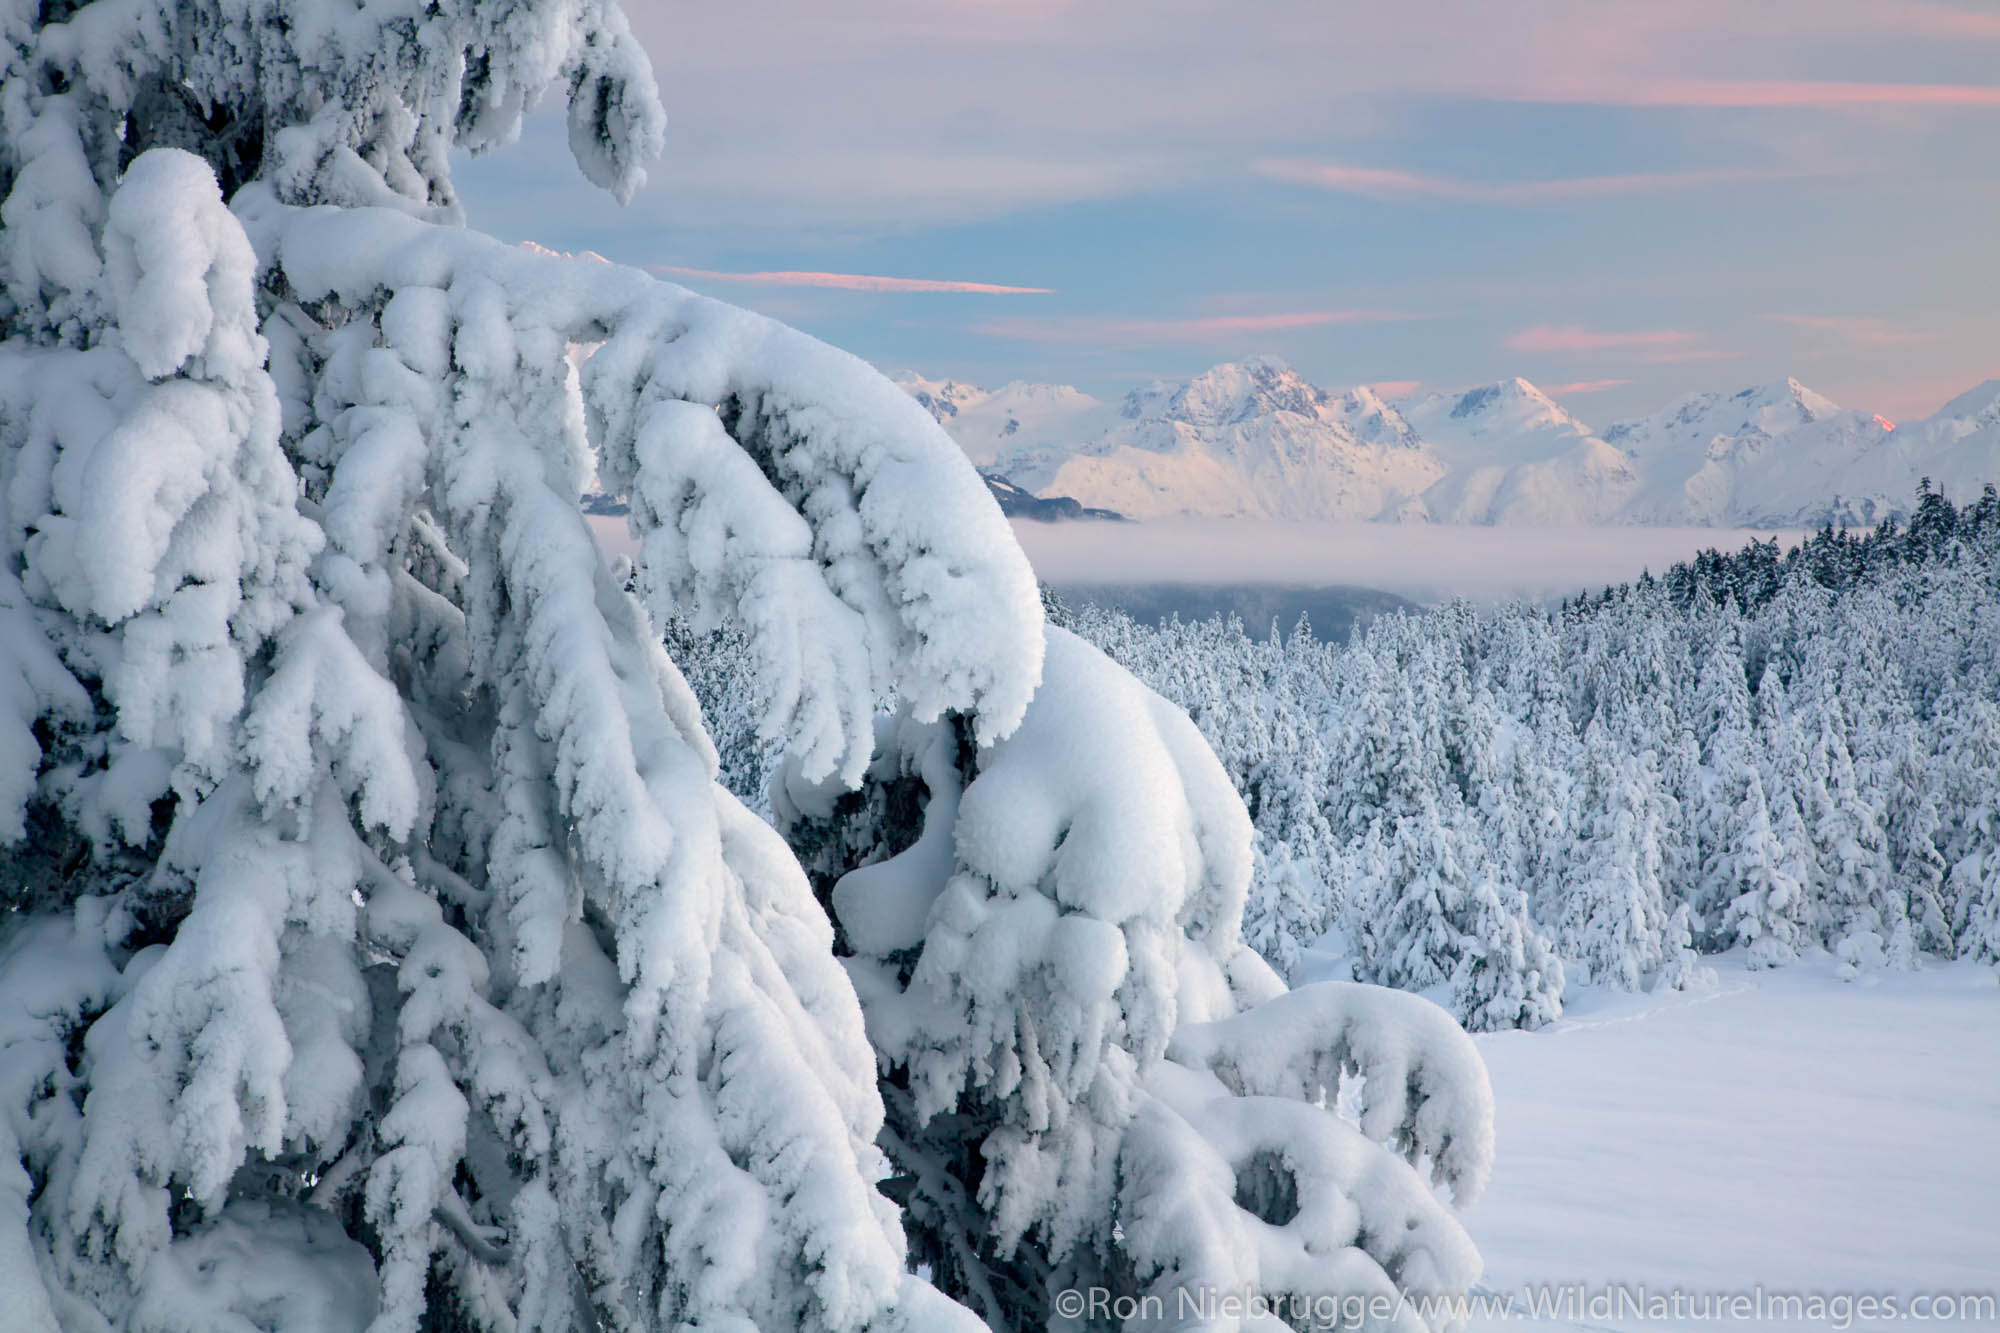 Snowy trees in Turnagain Pass, Chugach National Forest, Alaska.